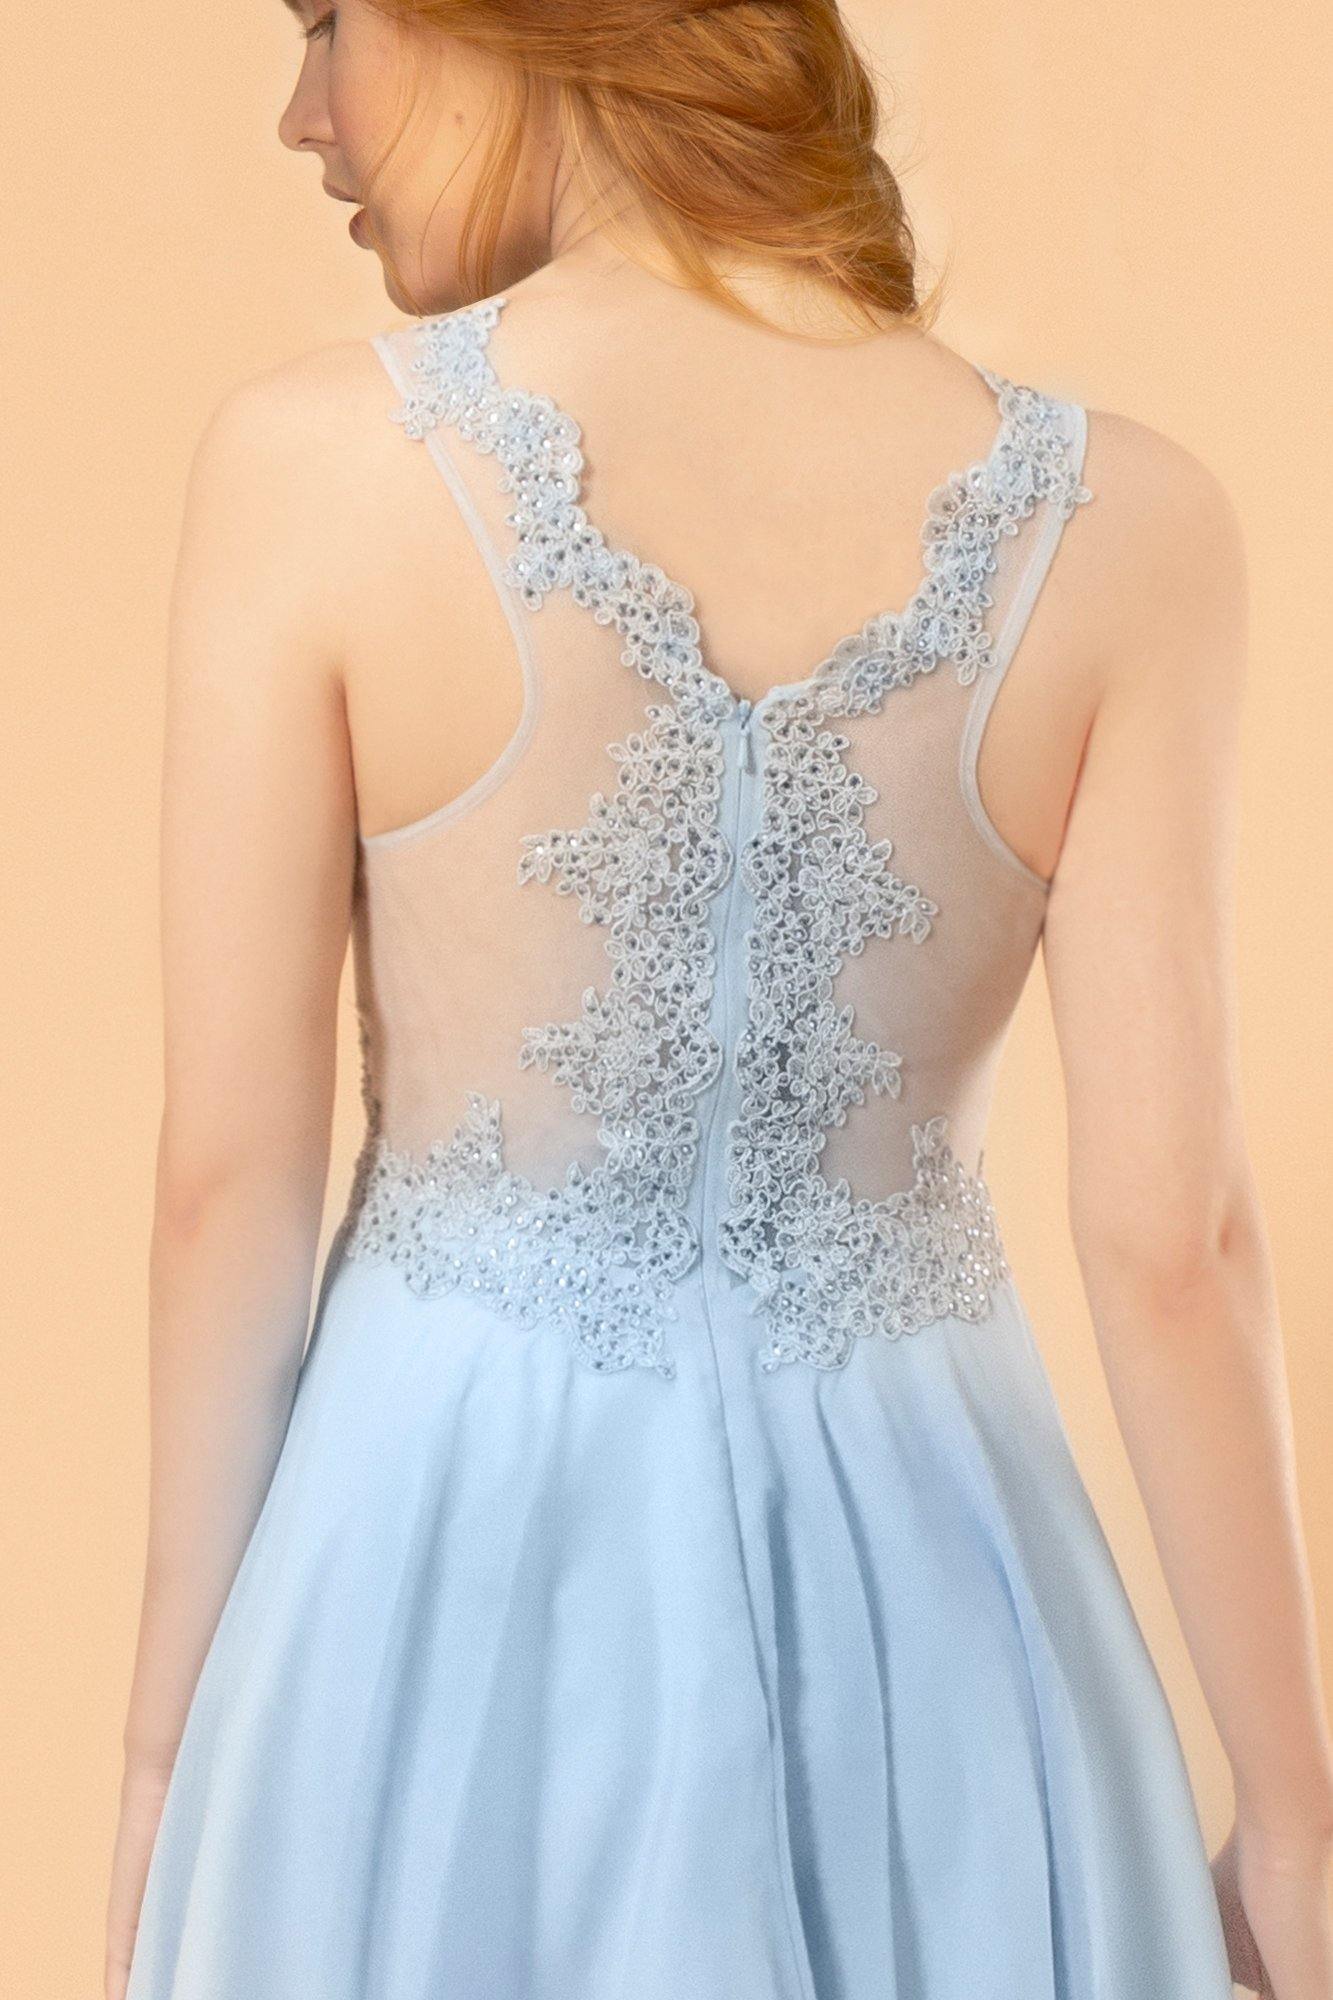 Embroidered Bodice Short Dress Homecoming - The Dress Outlet Elizabeth K